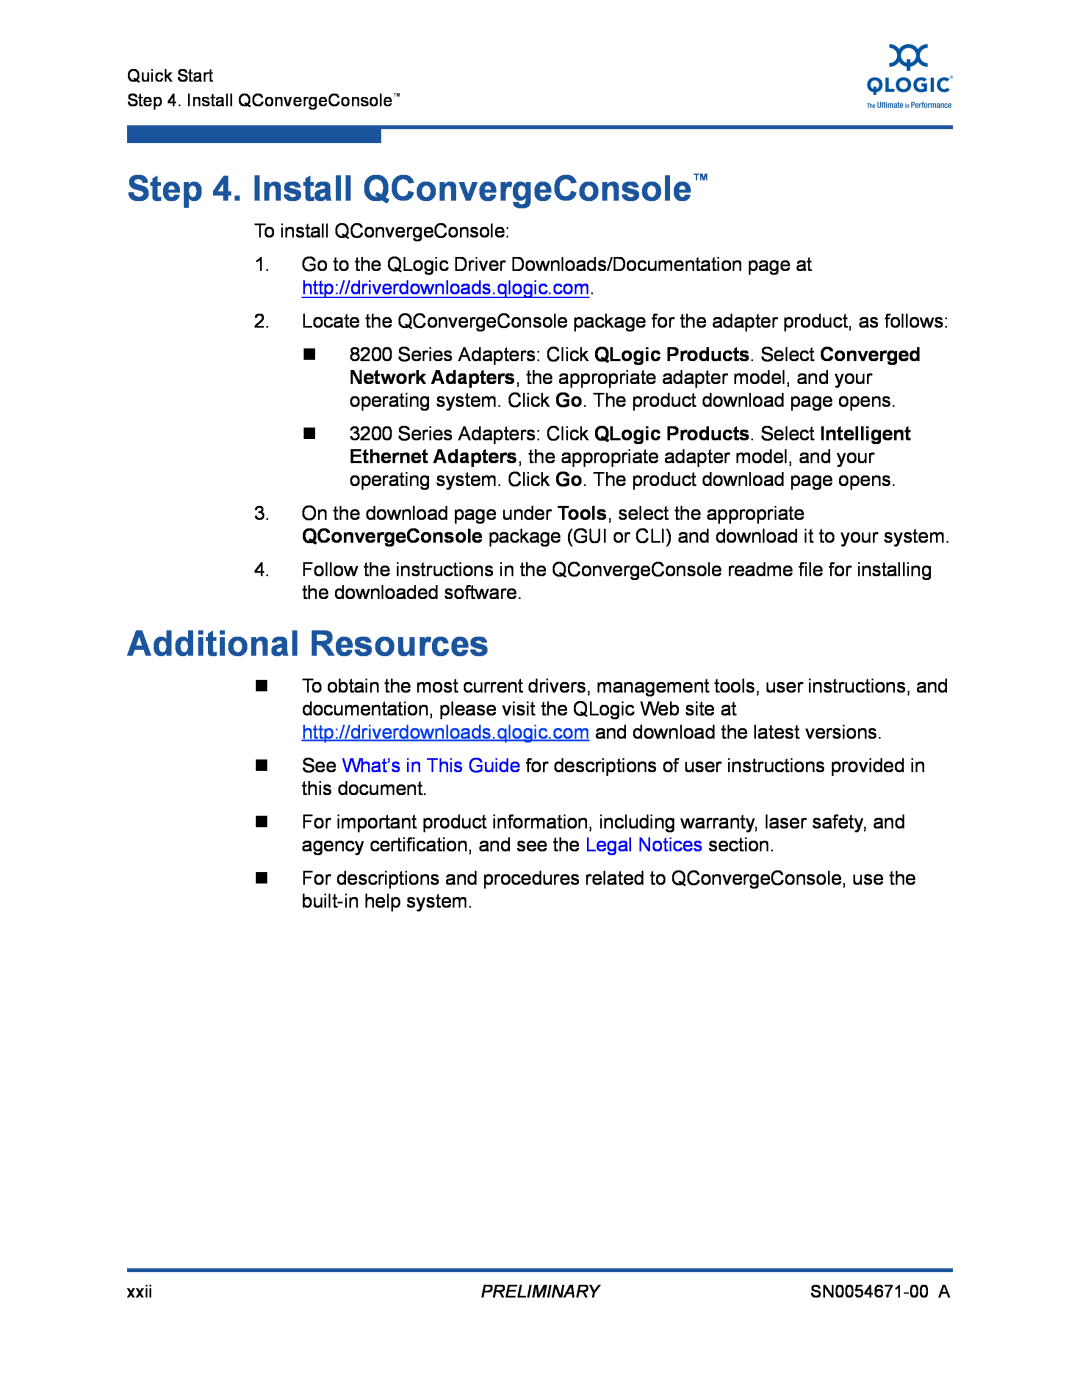 Q-Logic 8200, 3200 manual Install QConvergeConsole, Additional Resources 